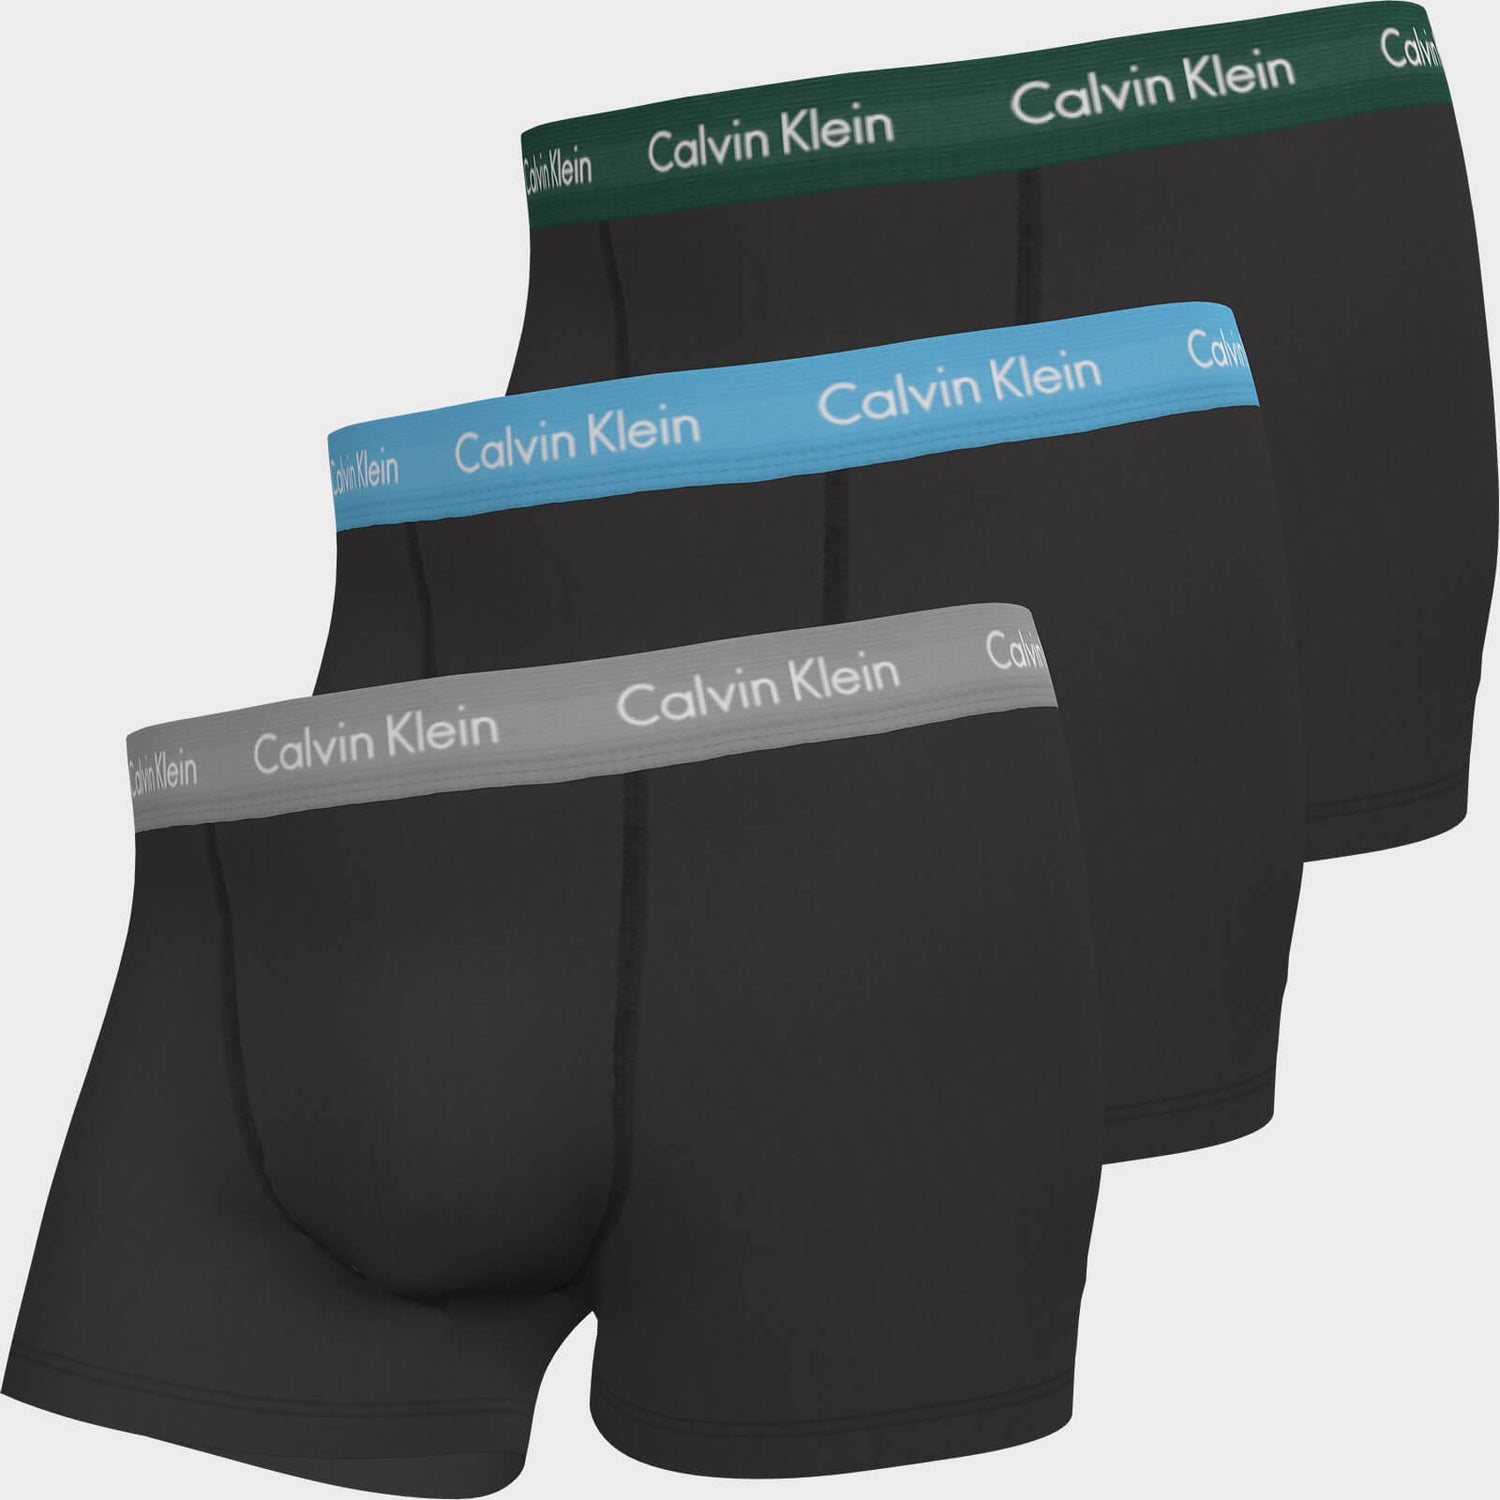 Calvin Klein Men's Cotton Stretch 3 Pack Trunks with Contrast Waistband - B-Jade Sea/Sky High/Sleek Silver